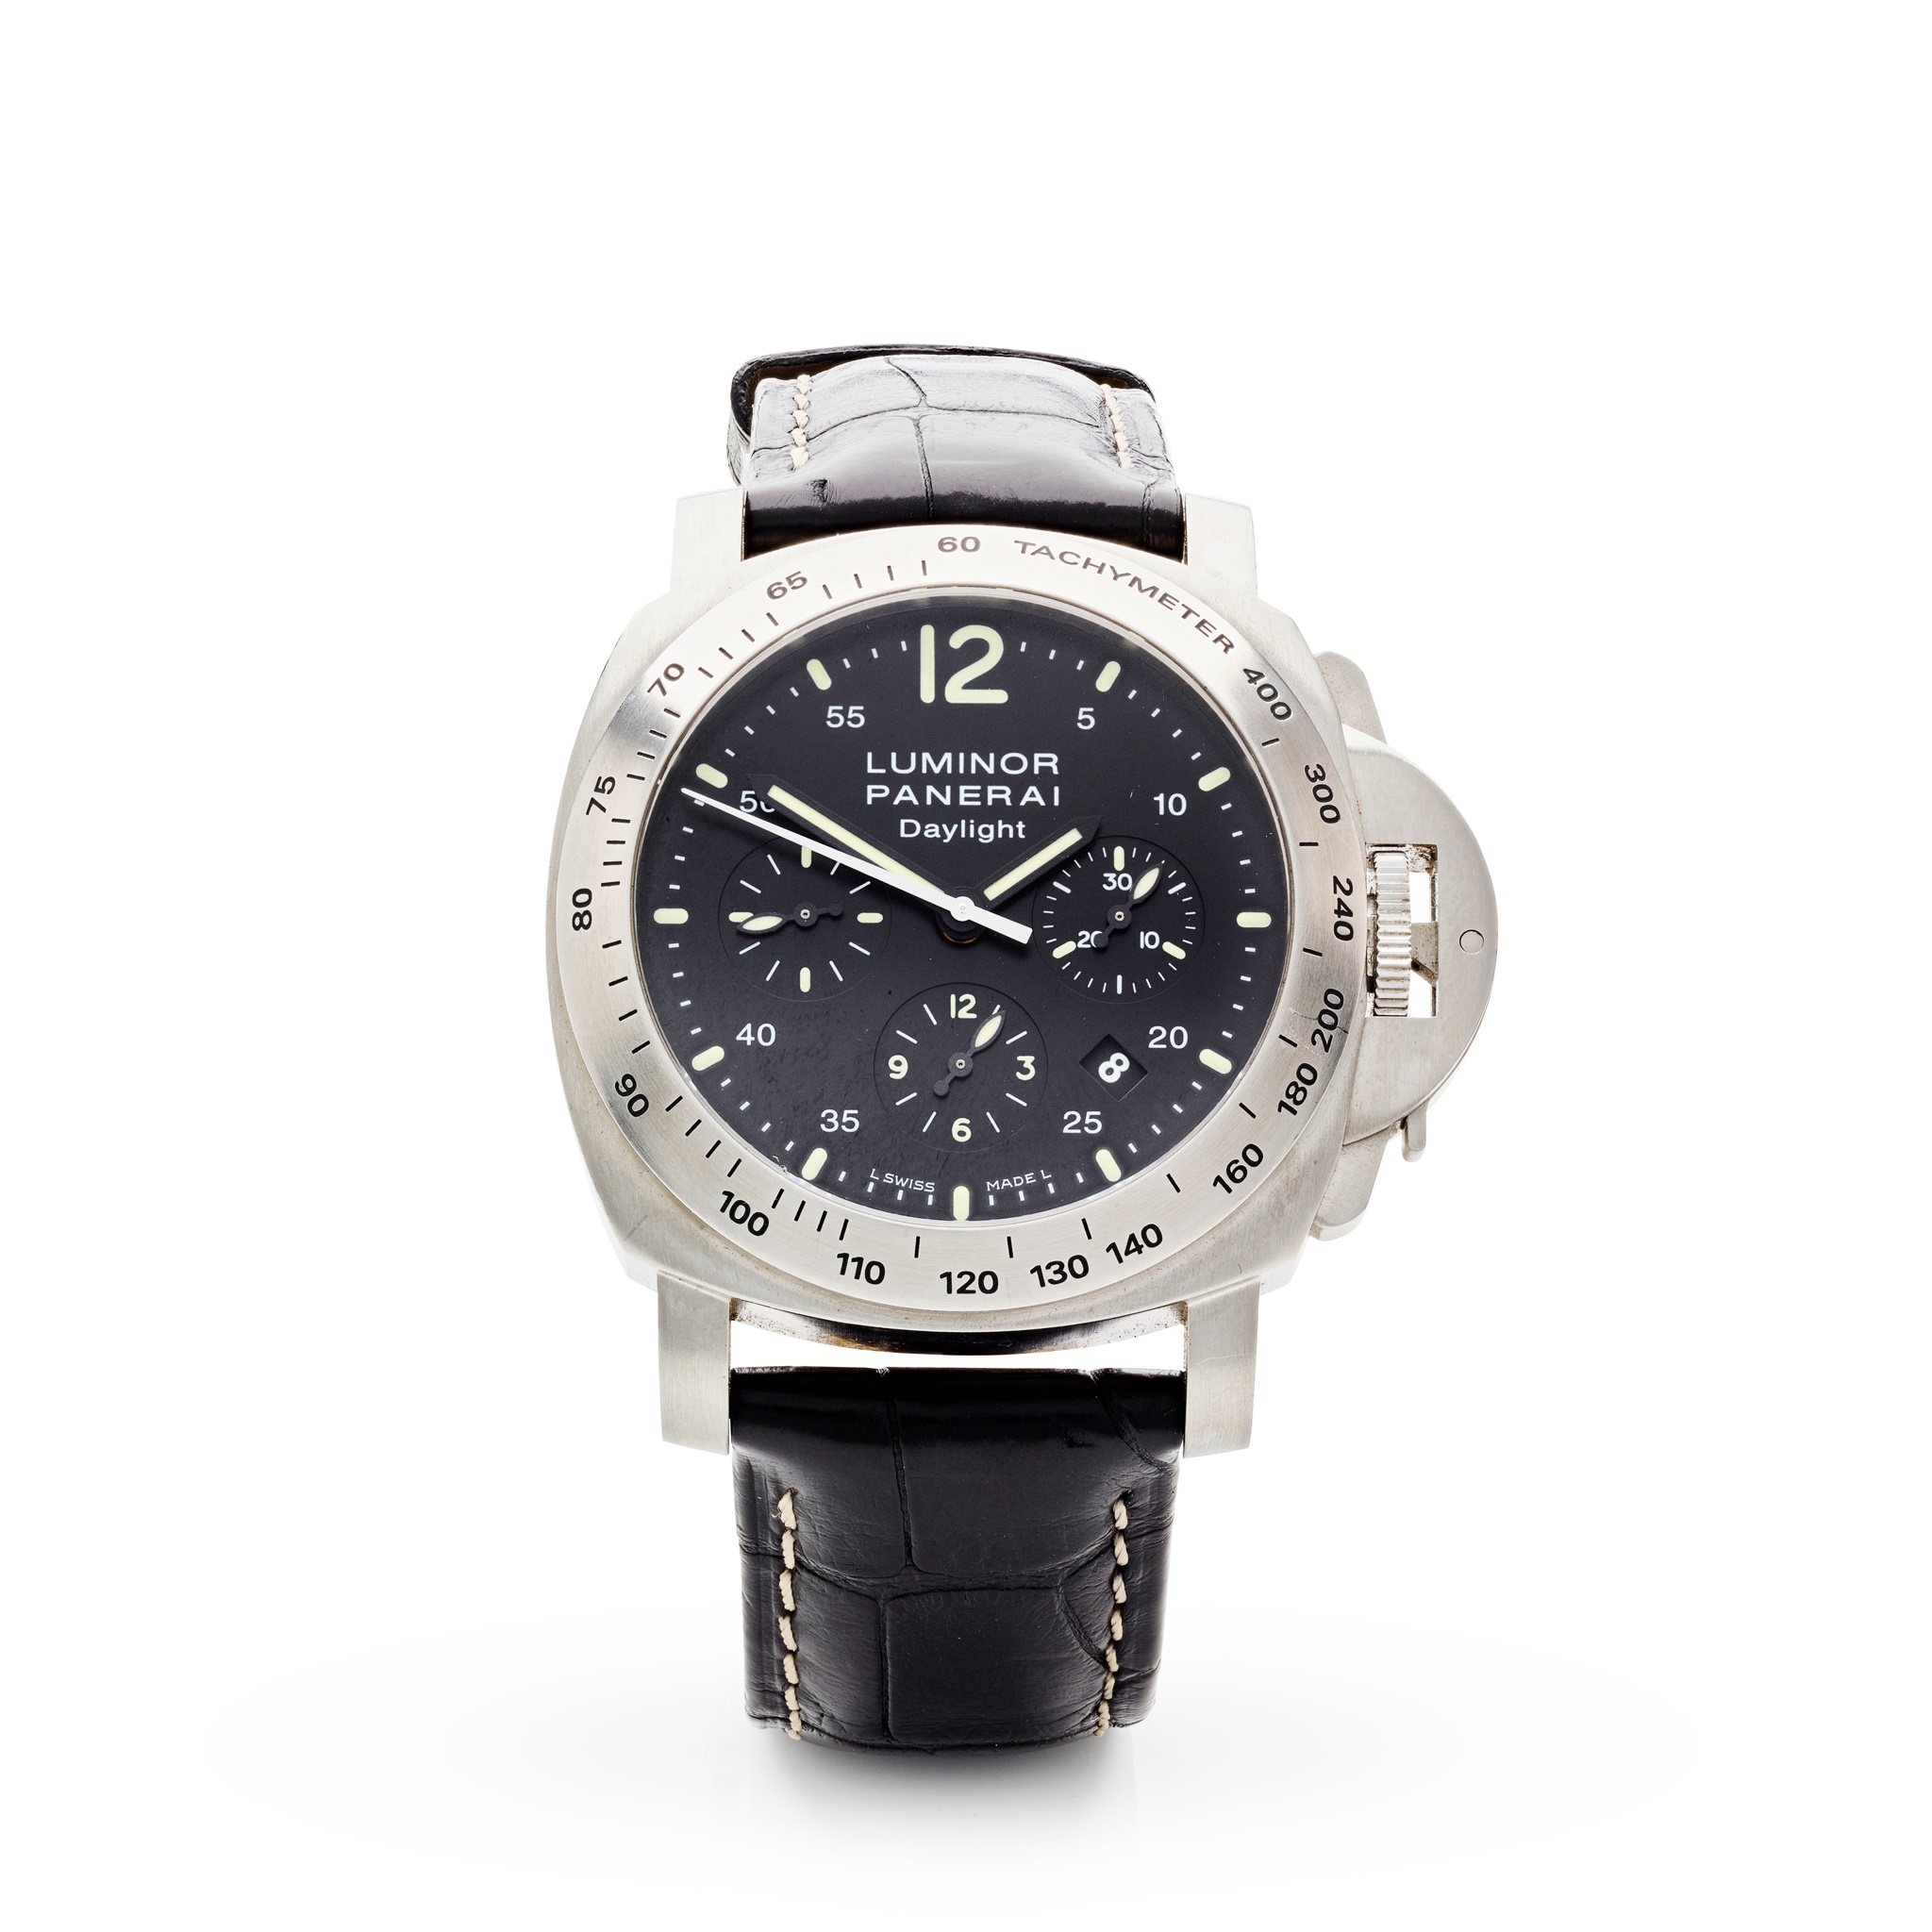 Panerai: a chronograph wrist watch